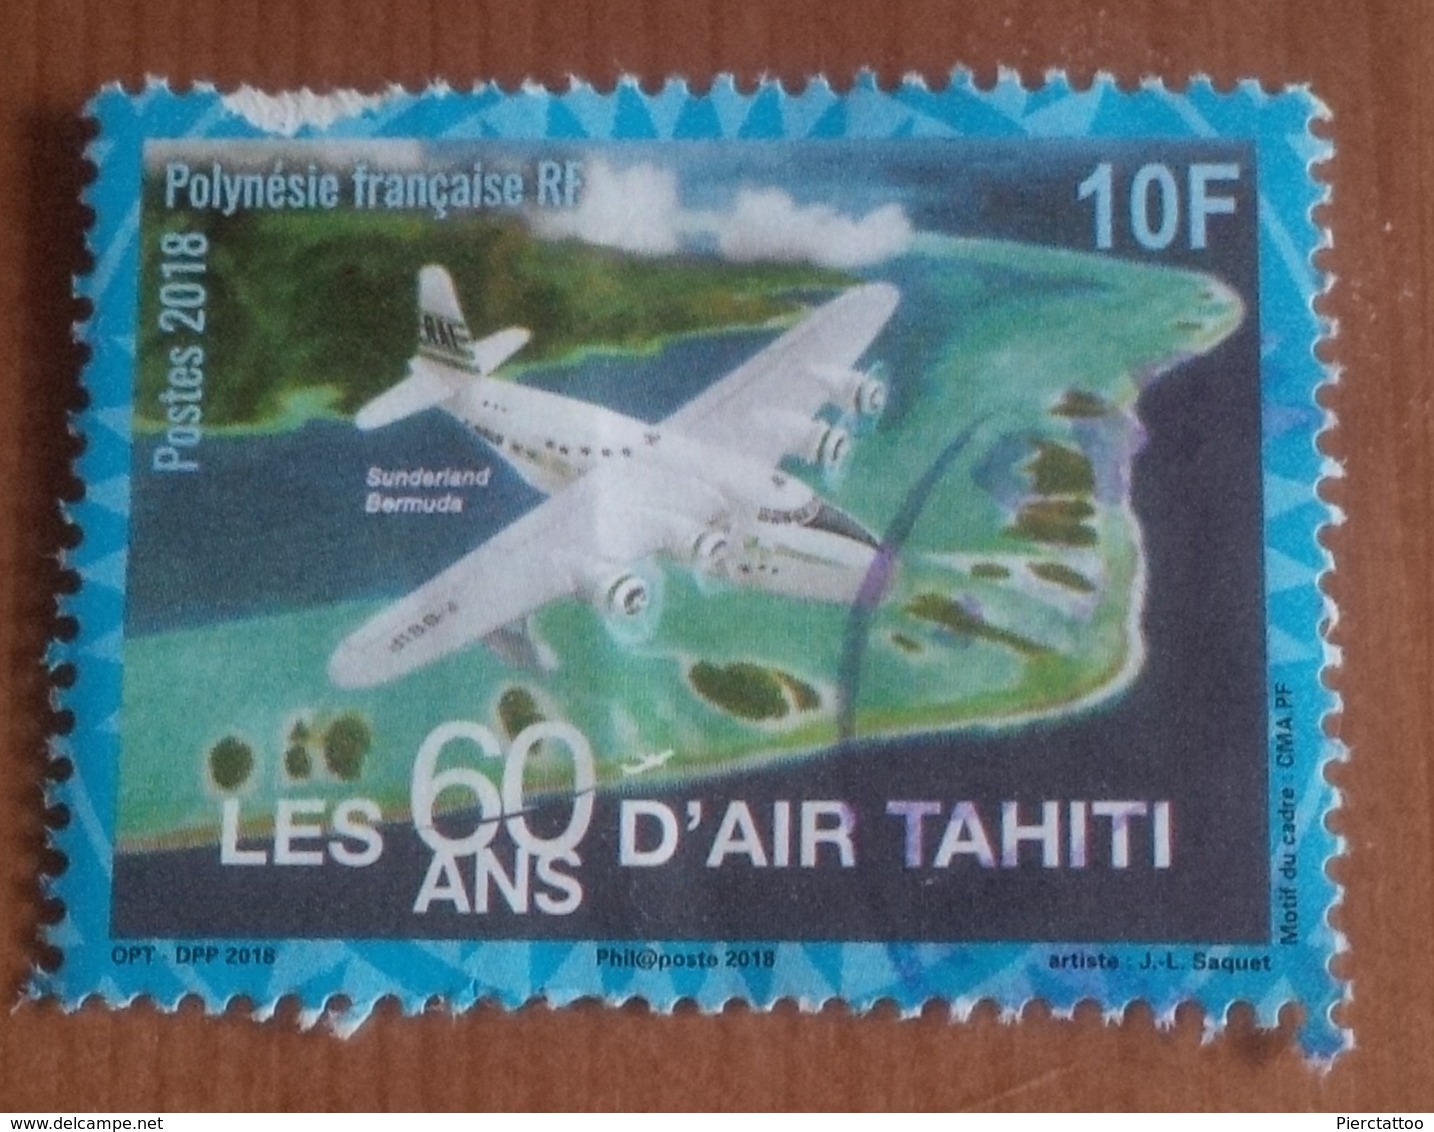 Les 60 Ans D'air Tahiti (Avion) - Polynésie Française - 2018 - YT 1176 - Used Stamps